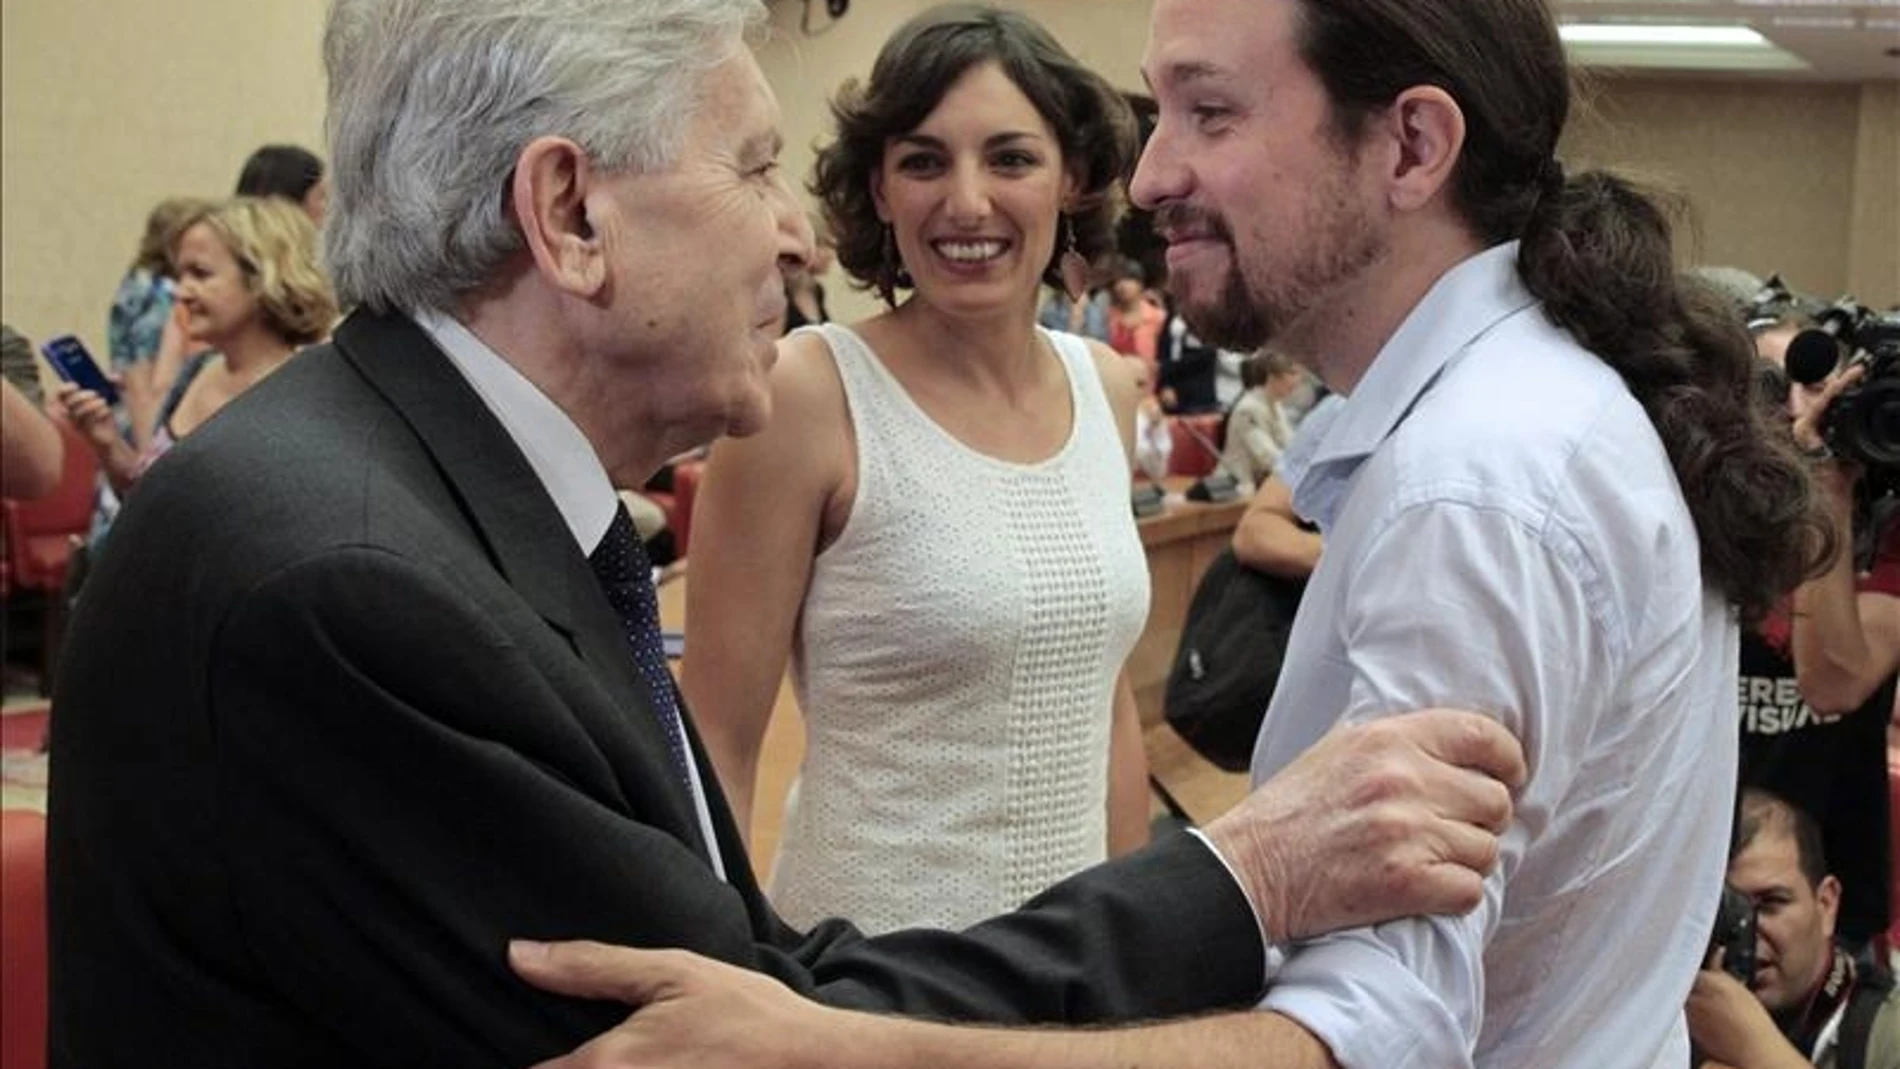 Pablo Iglesias, cabeza de lista y eurodiputado de Podemos, conversa con Carlos Jimenez Villarejo